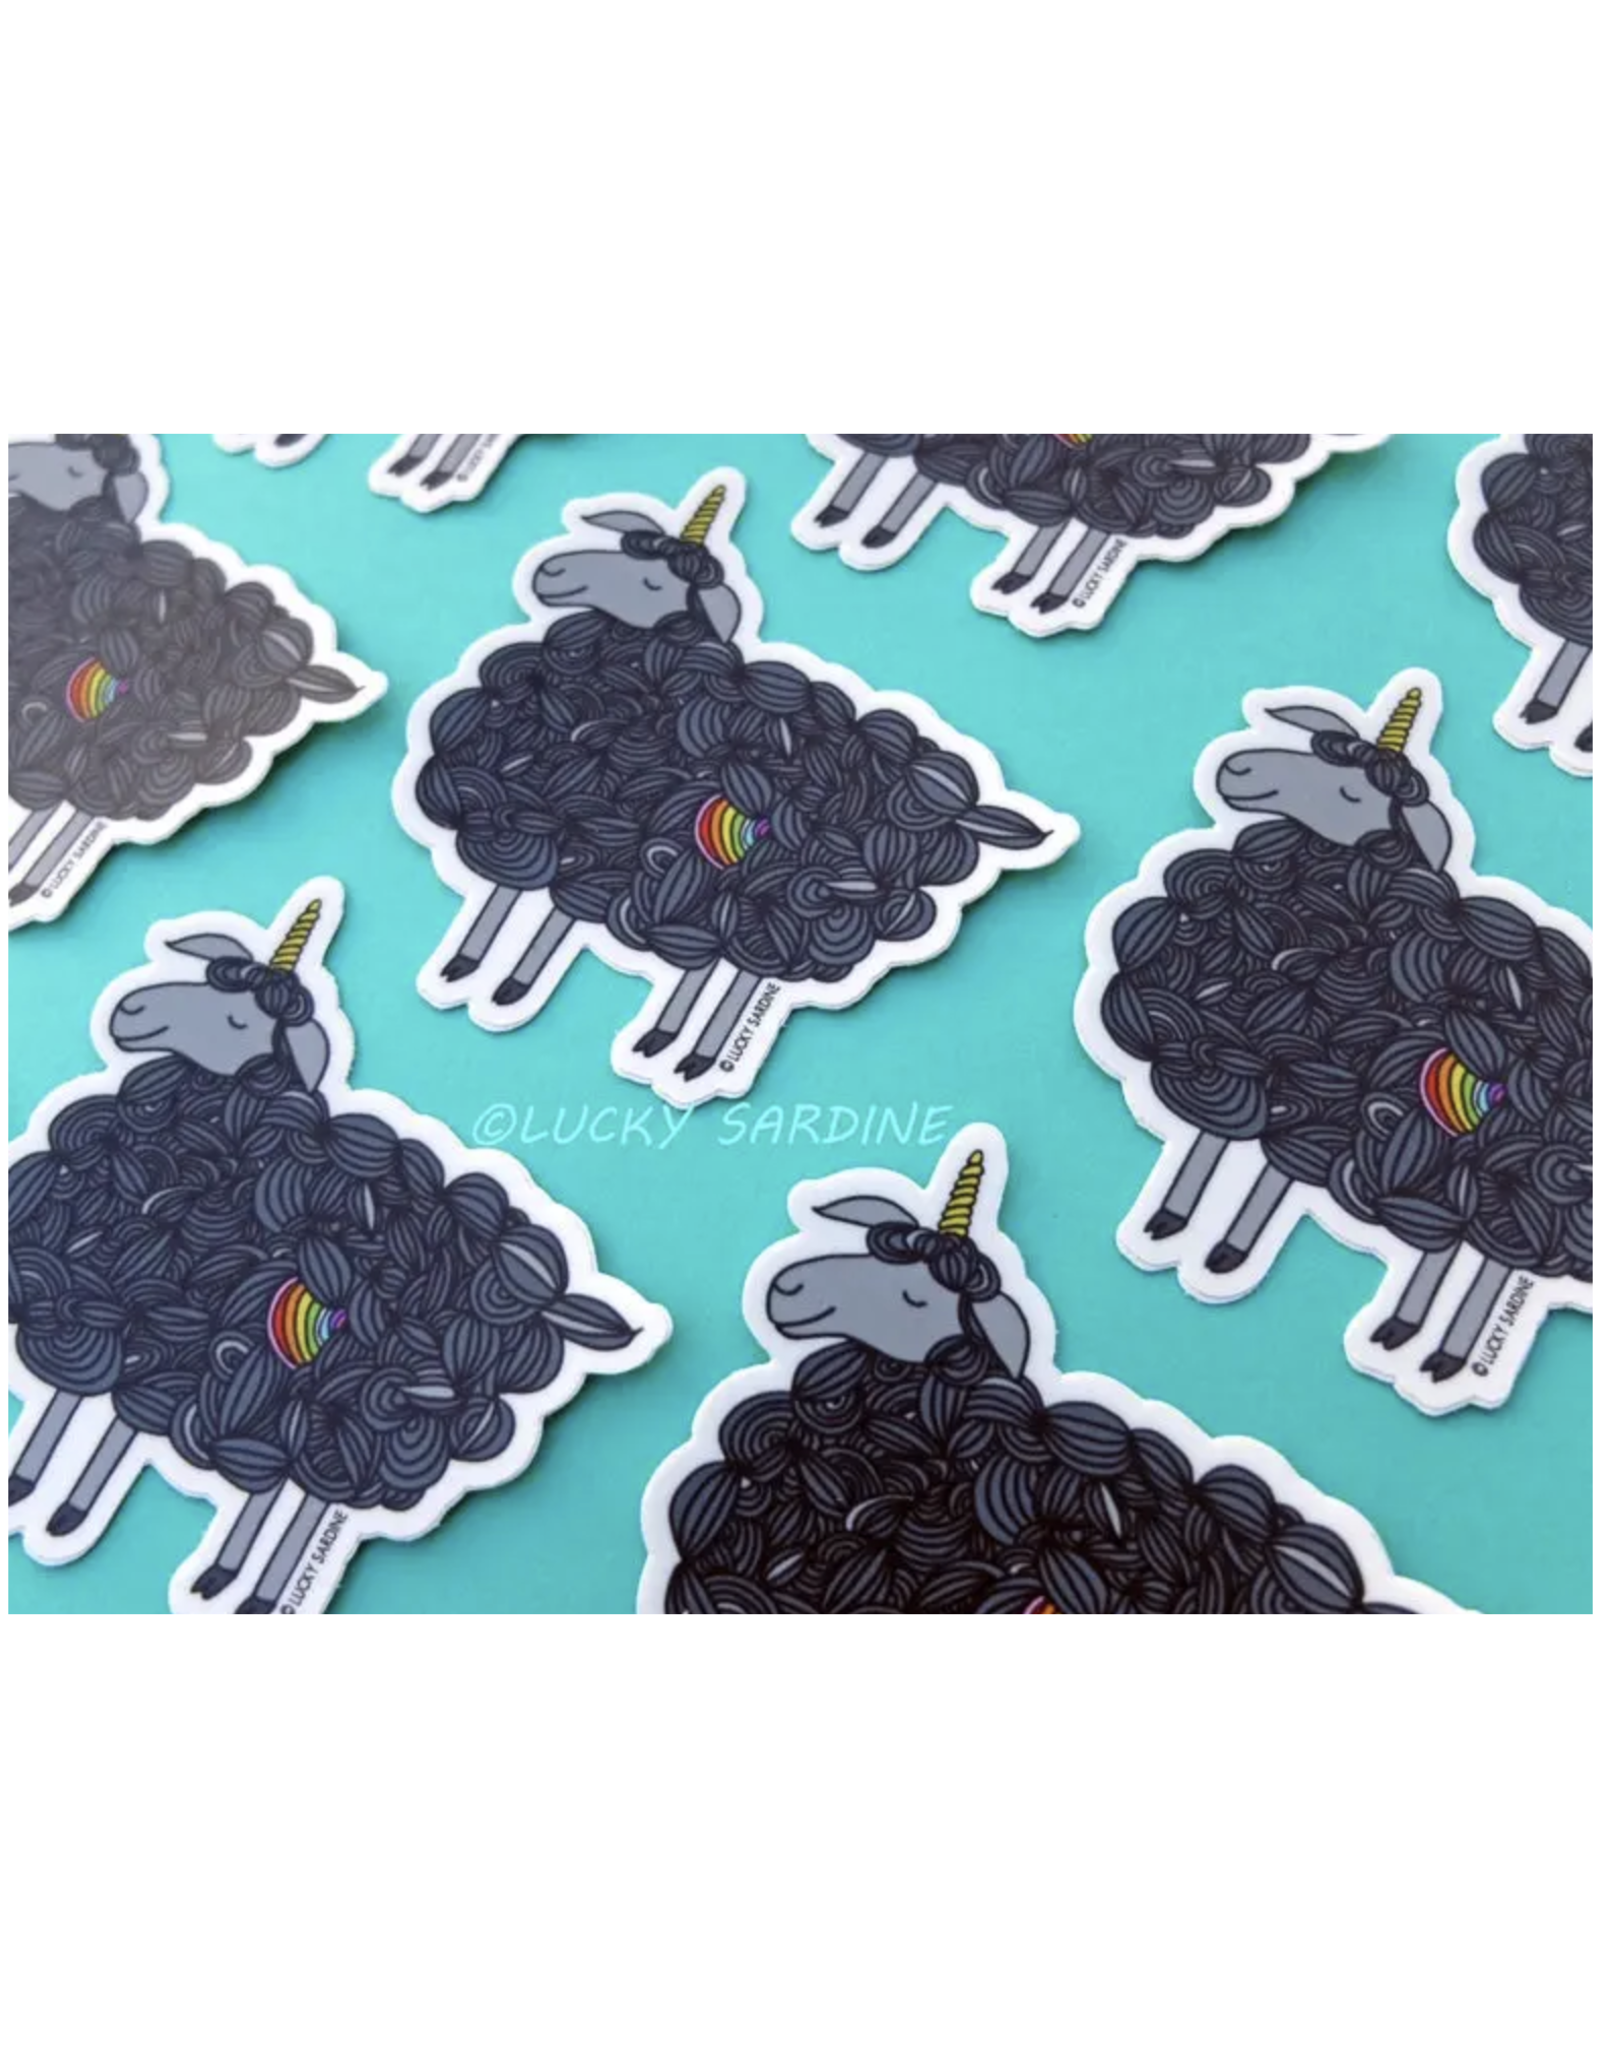 Rainbow Black Sheep Sticker